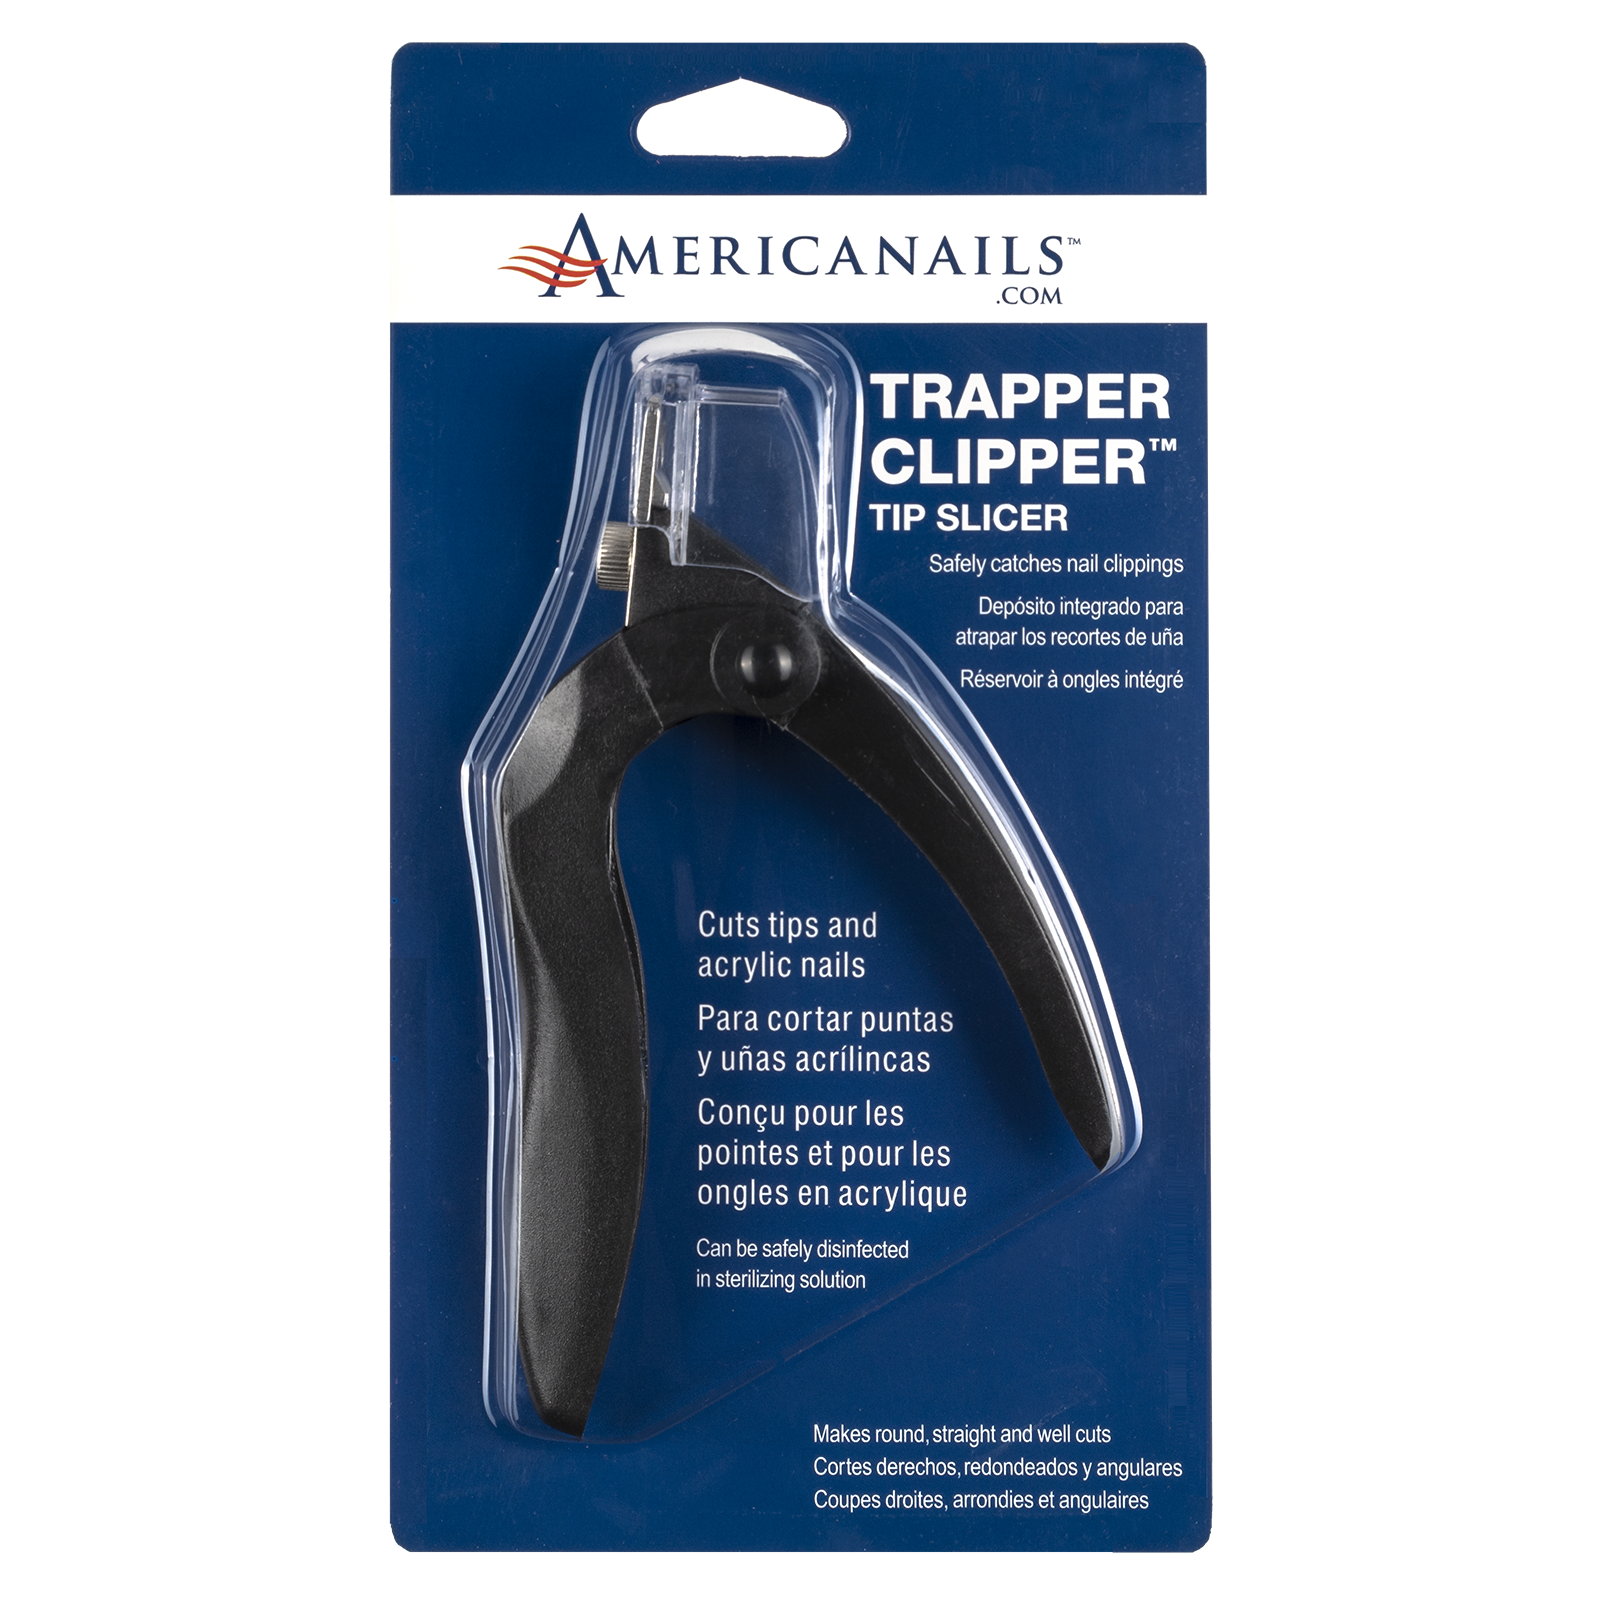 Americanails Trapper Clipper Tip Slicer 1